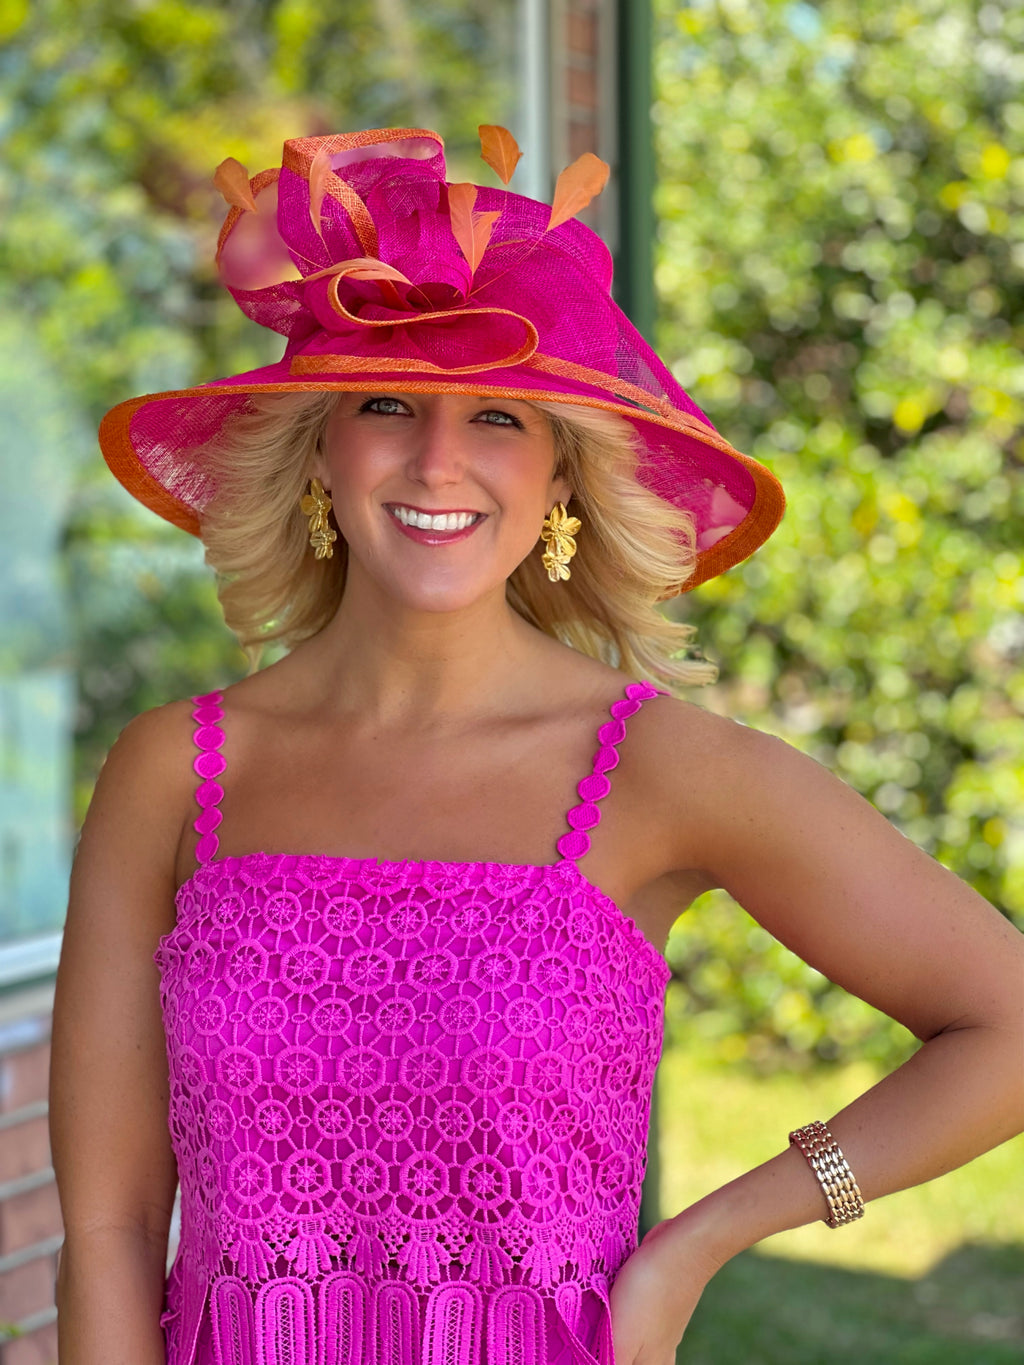 Hot Pink & Orange Sinamay Derby Hat